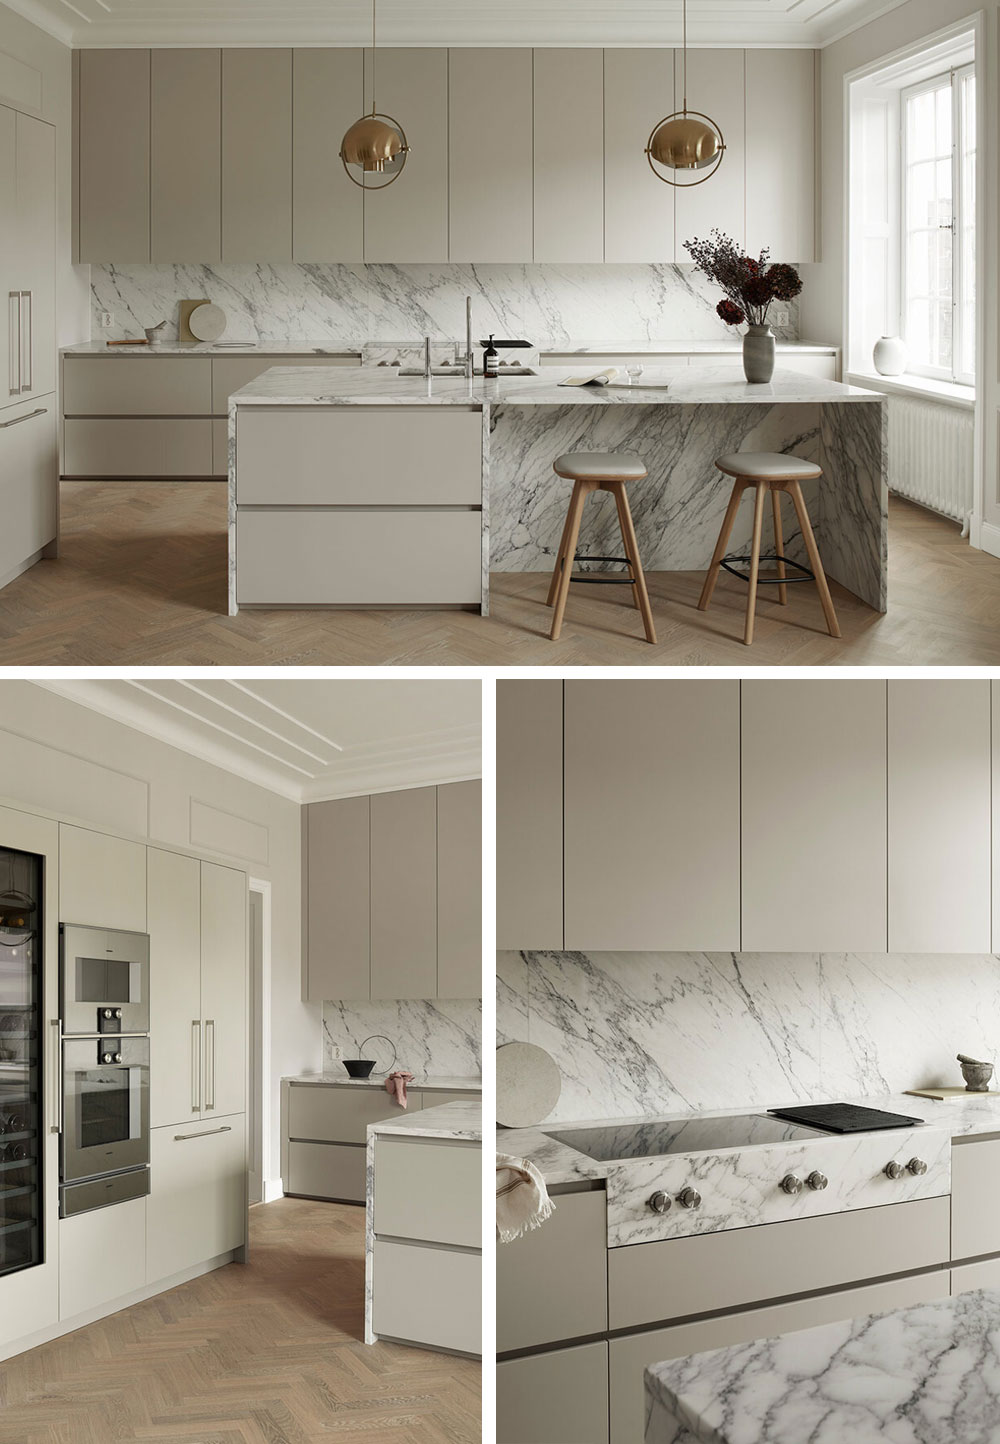 https://nordicdesign.ca/wp-content/uploads/2021/09/Tone-on-tone-beige-kitchens-the-Scandinavian-way-nordicdesign-09.jpg